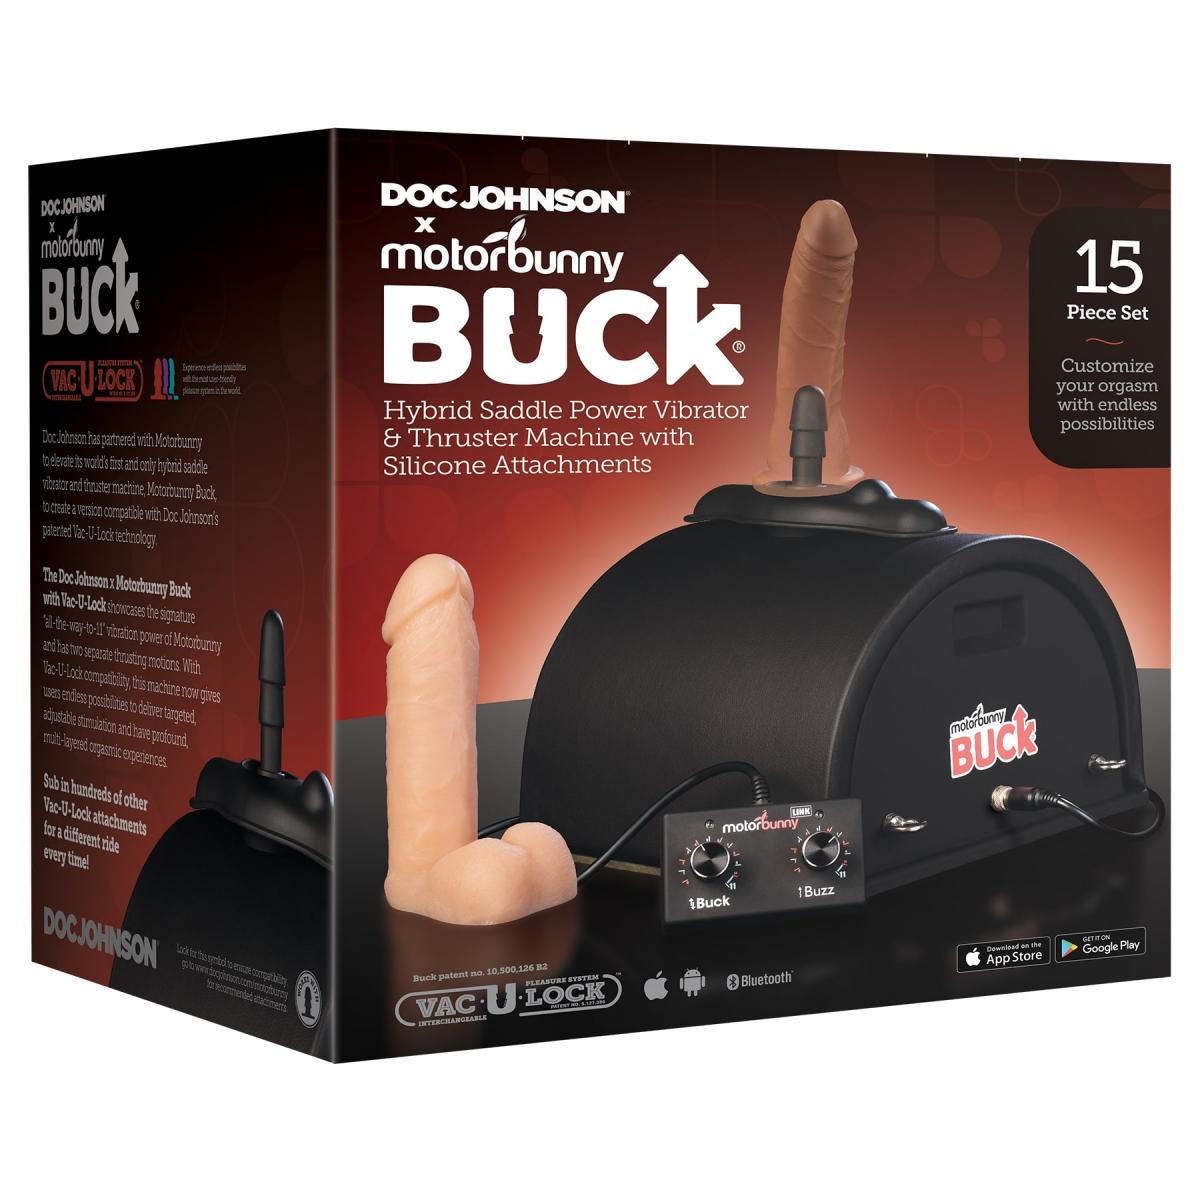 Motorbunny - Motorbunny Buck